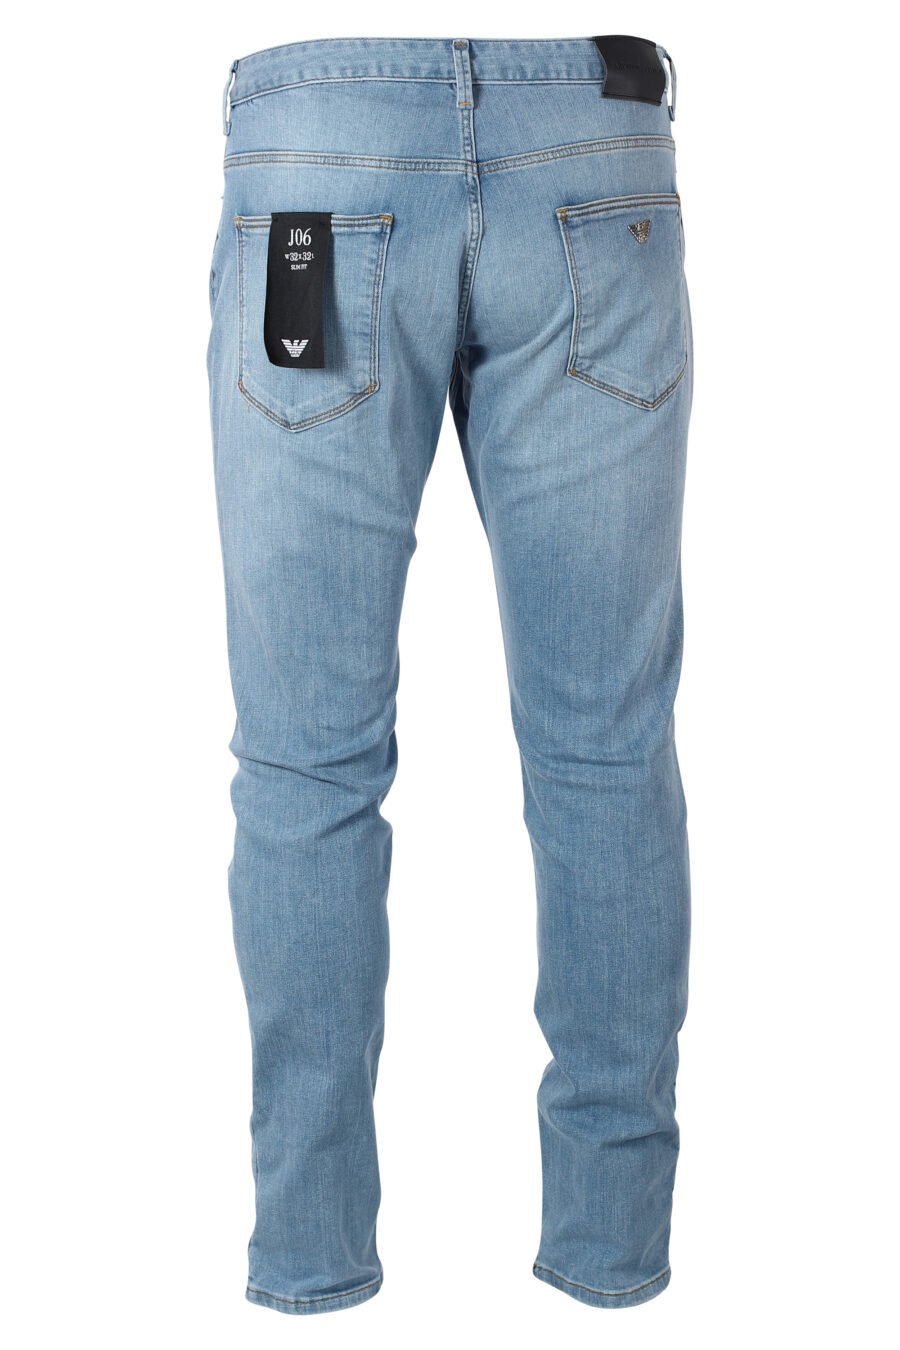 Pantalon en denim bleu clair avec mini logo en métal - IMG 9935